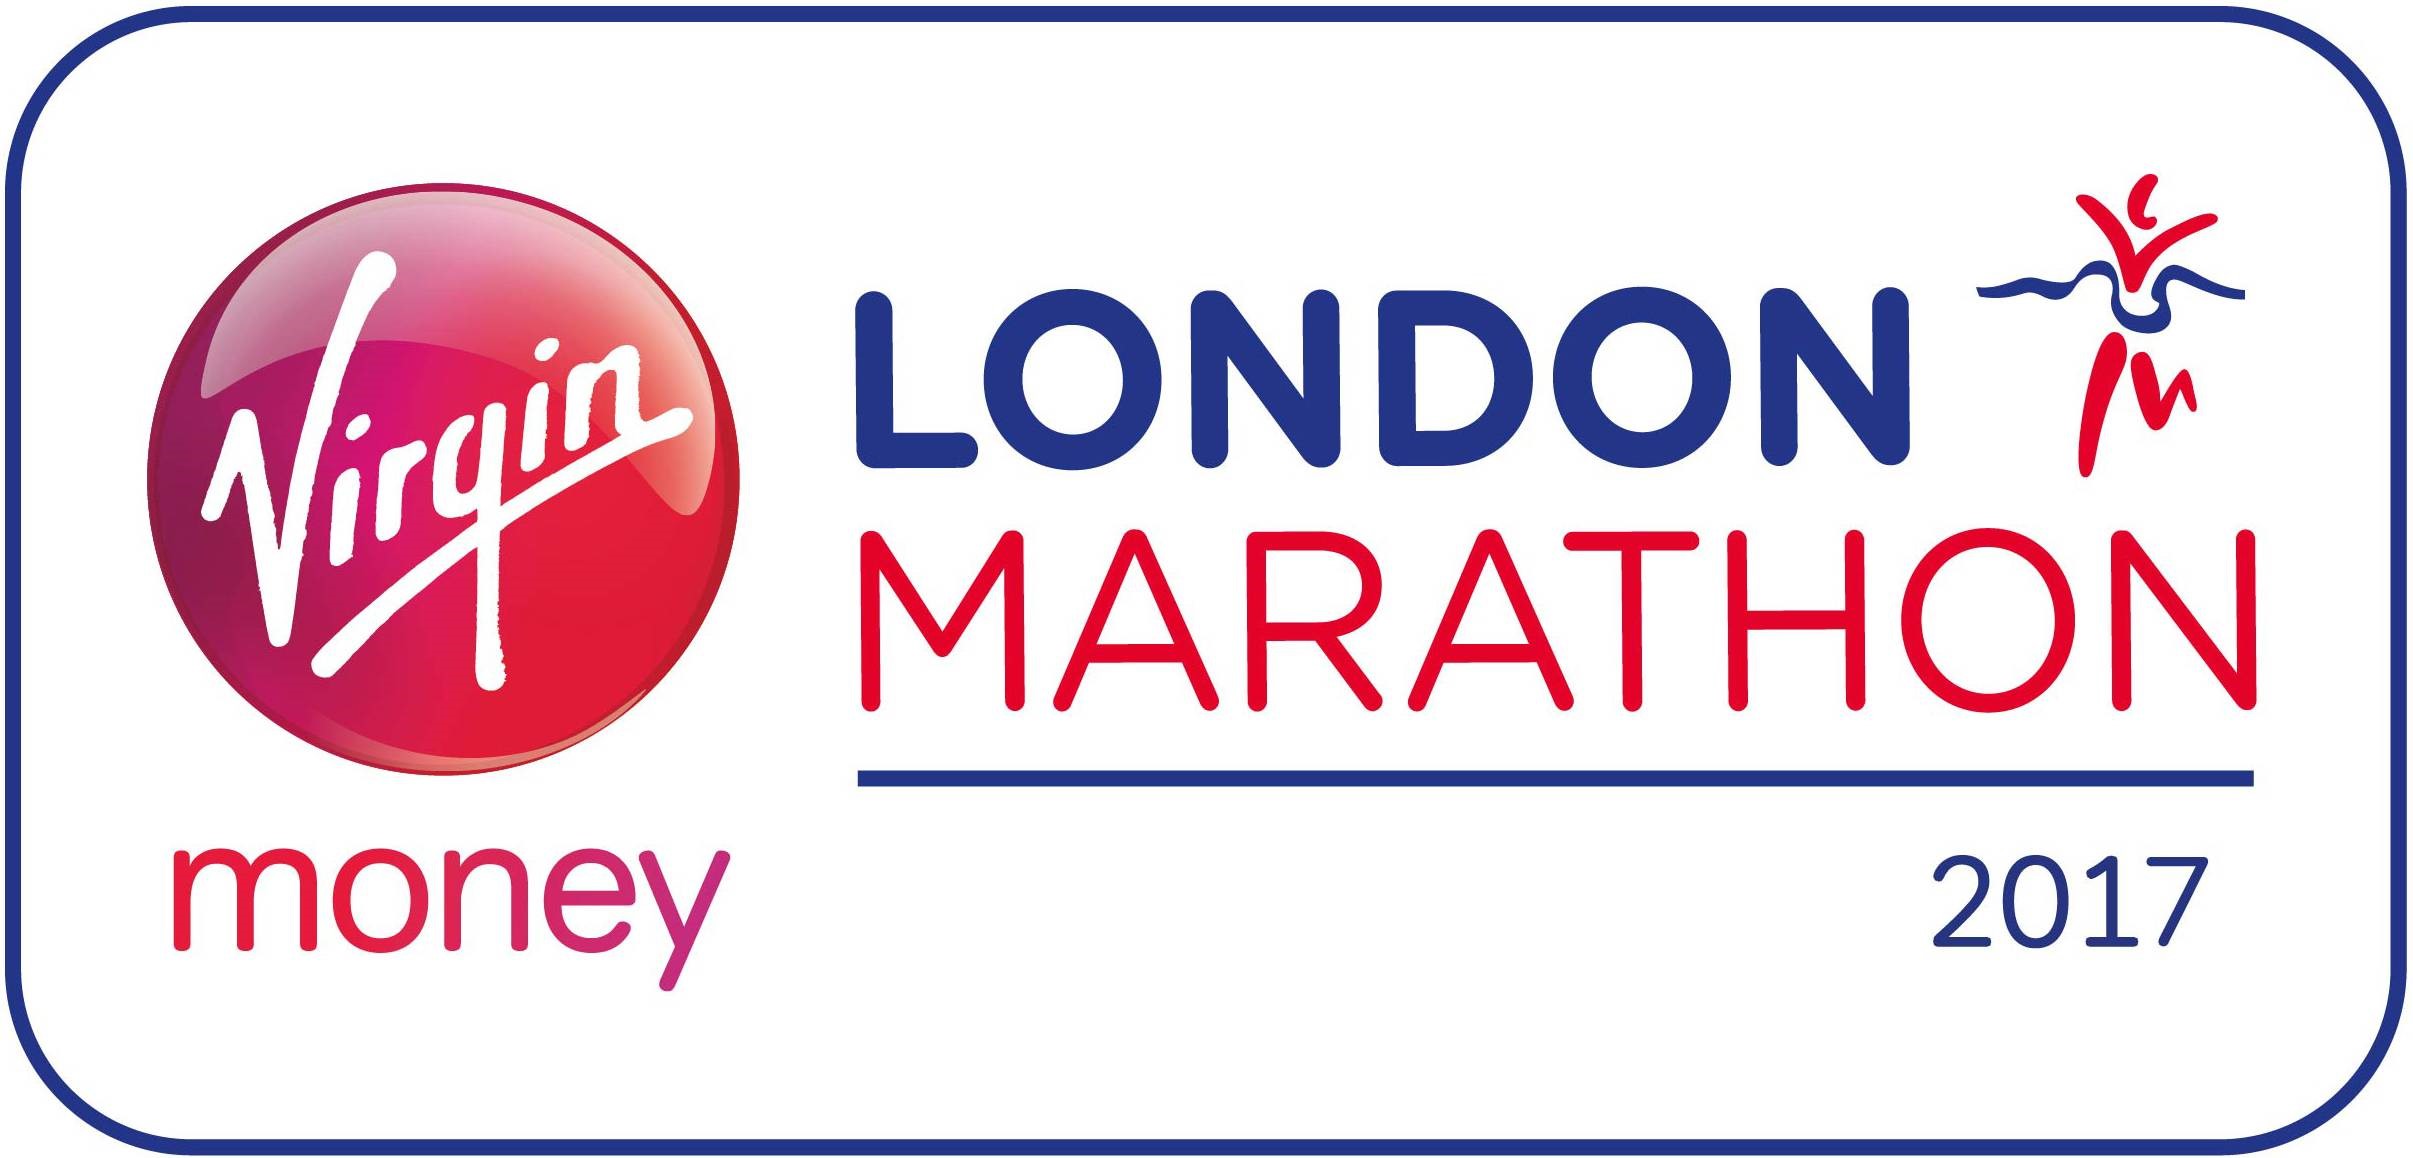 Virgin London Marathon 2017